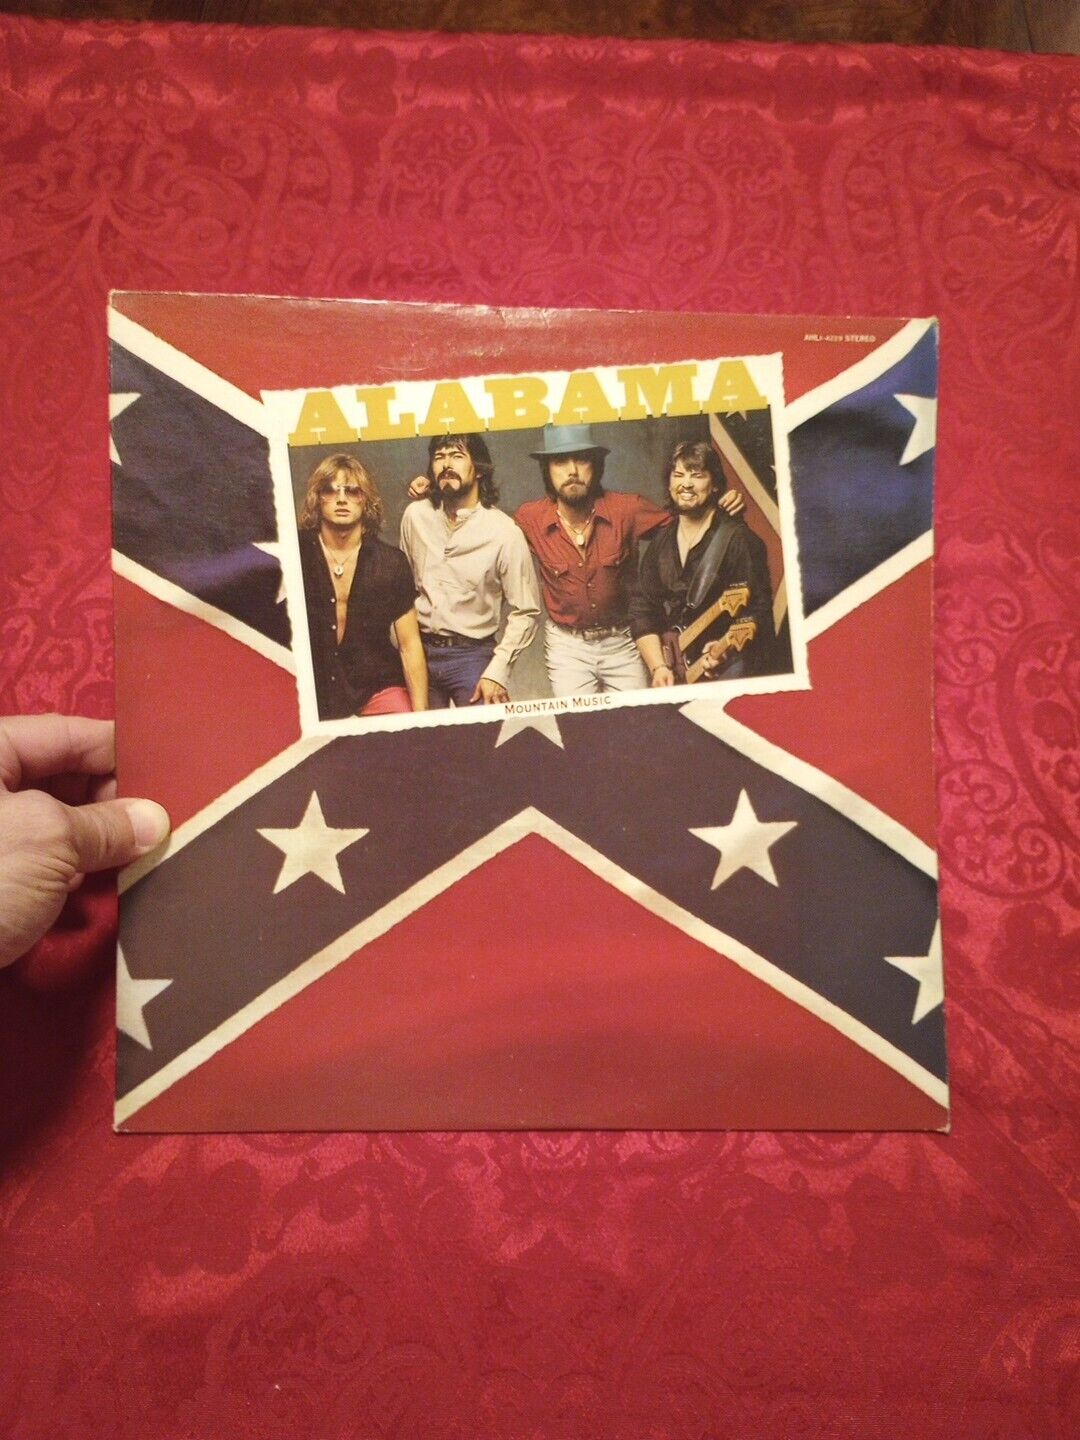 Vintage 1982 Alabama Mountain Music Vinyl LP RCA Records Tested